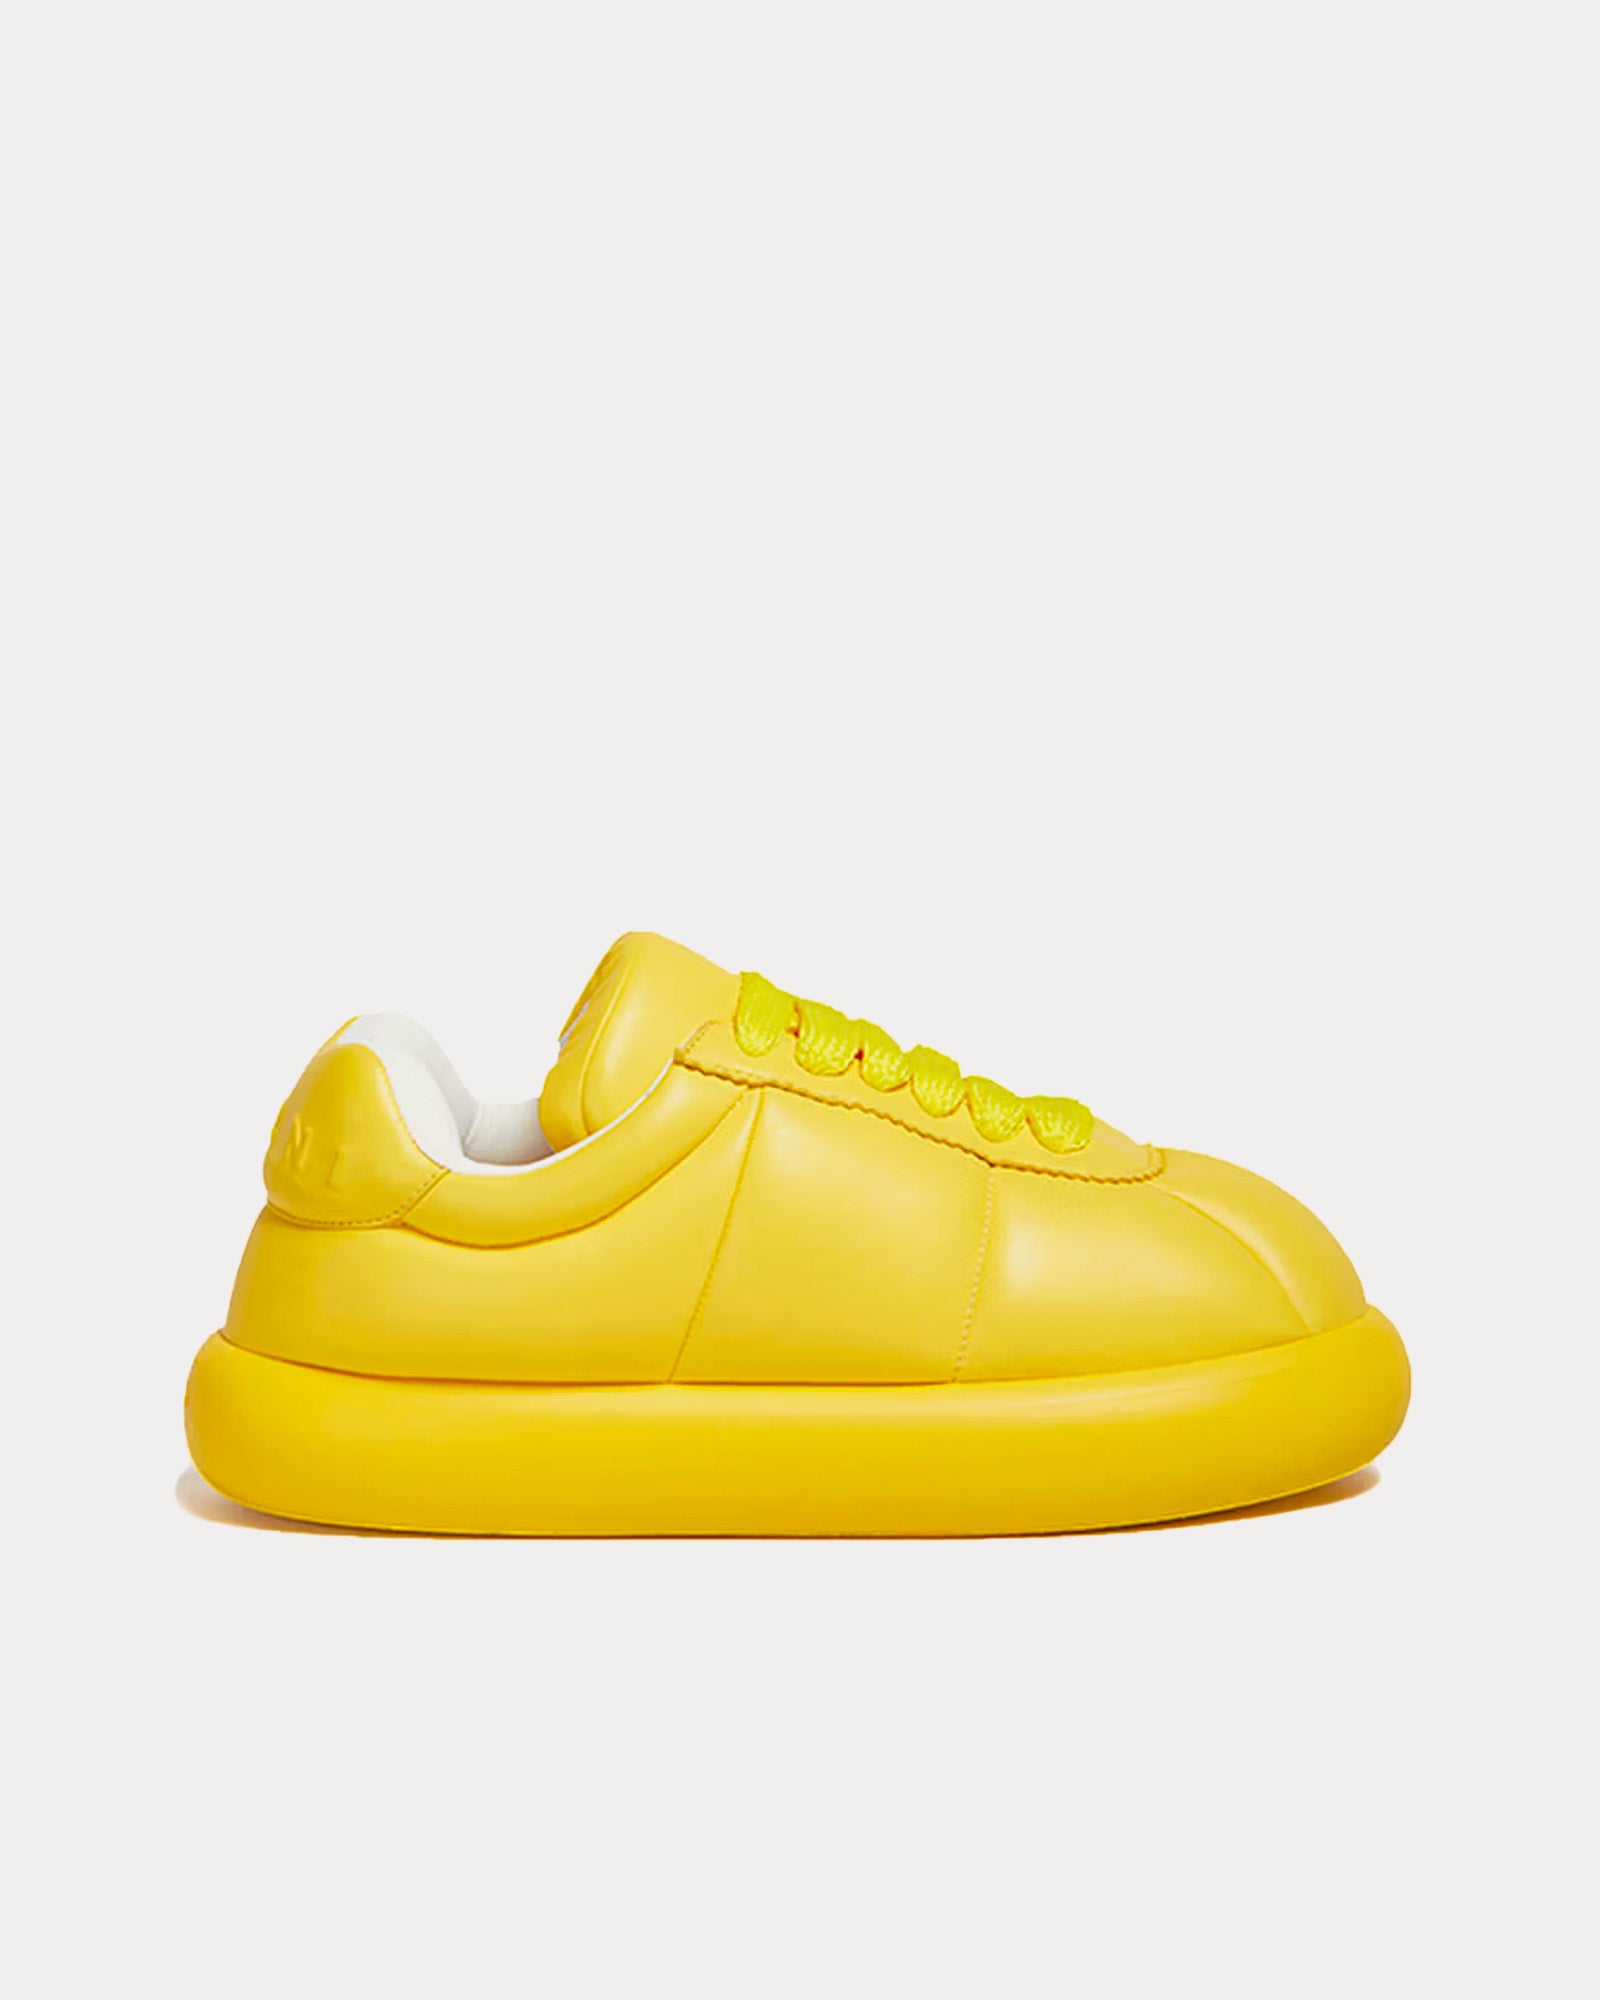 Marni - Bigfoot 2.0 Leather Yellow Low Top Sneakers